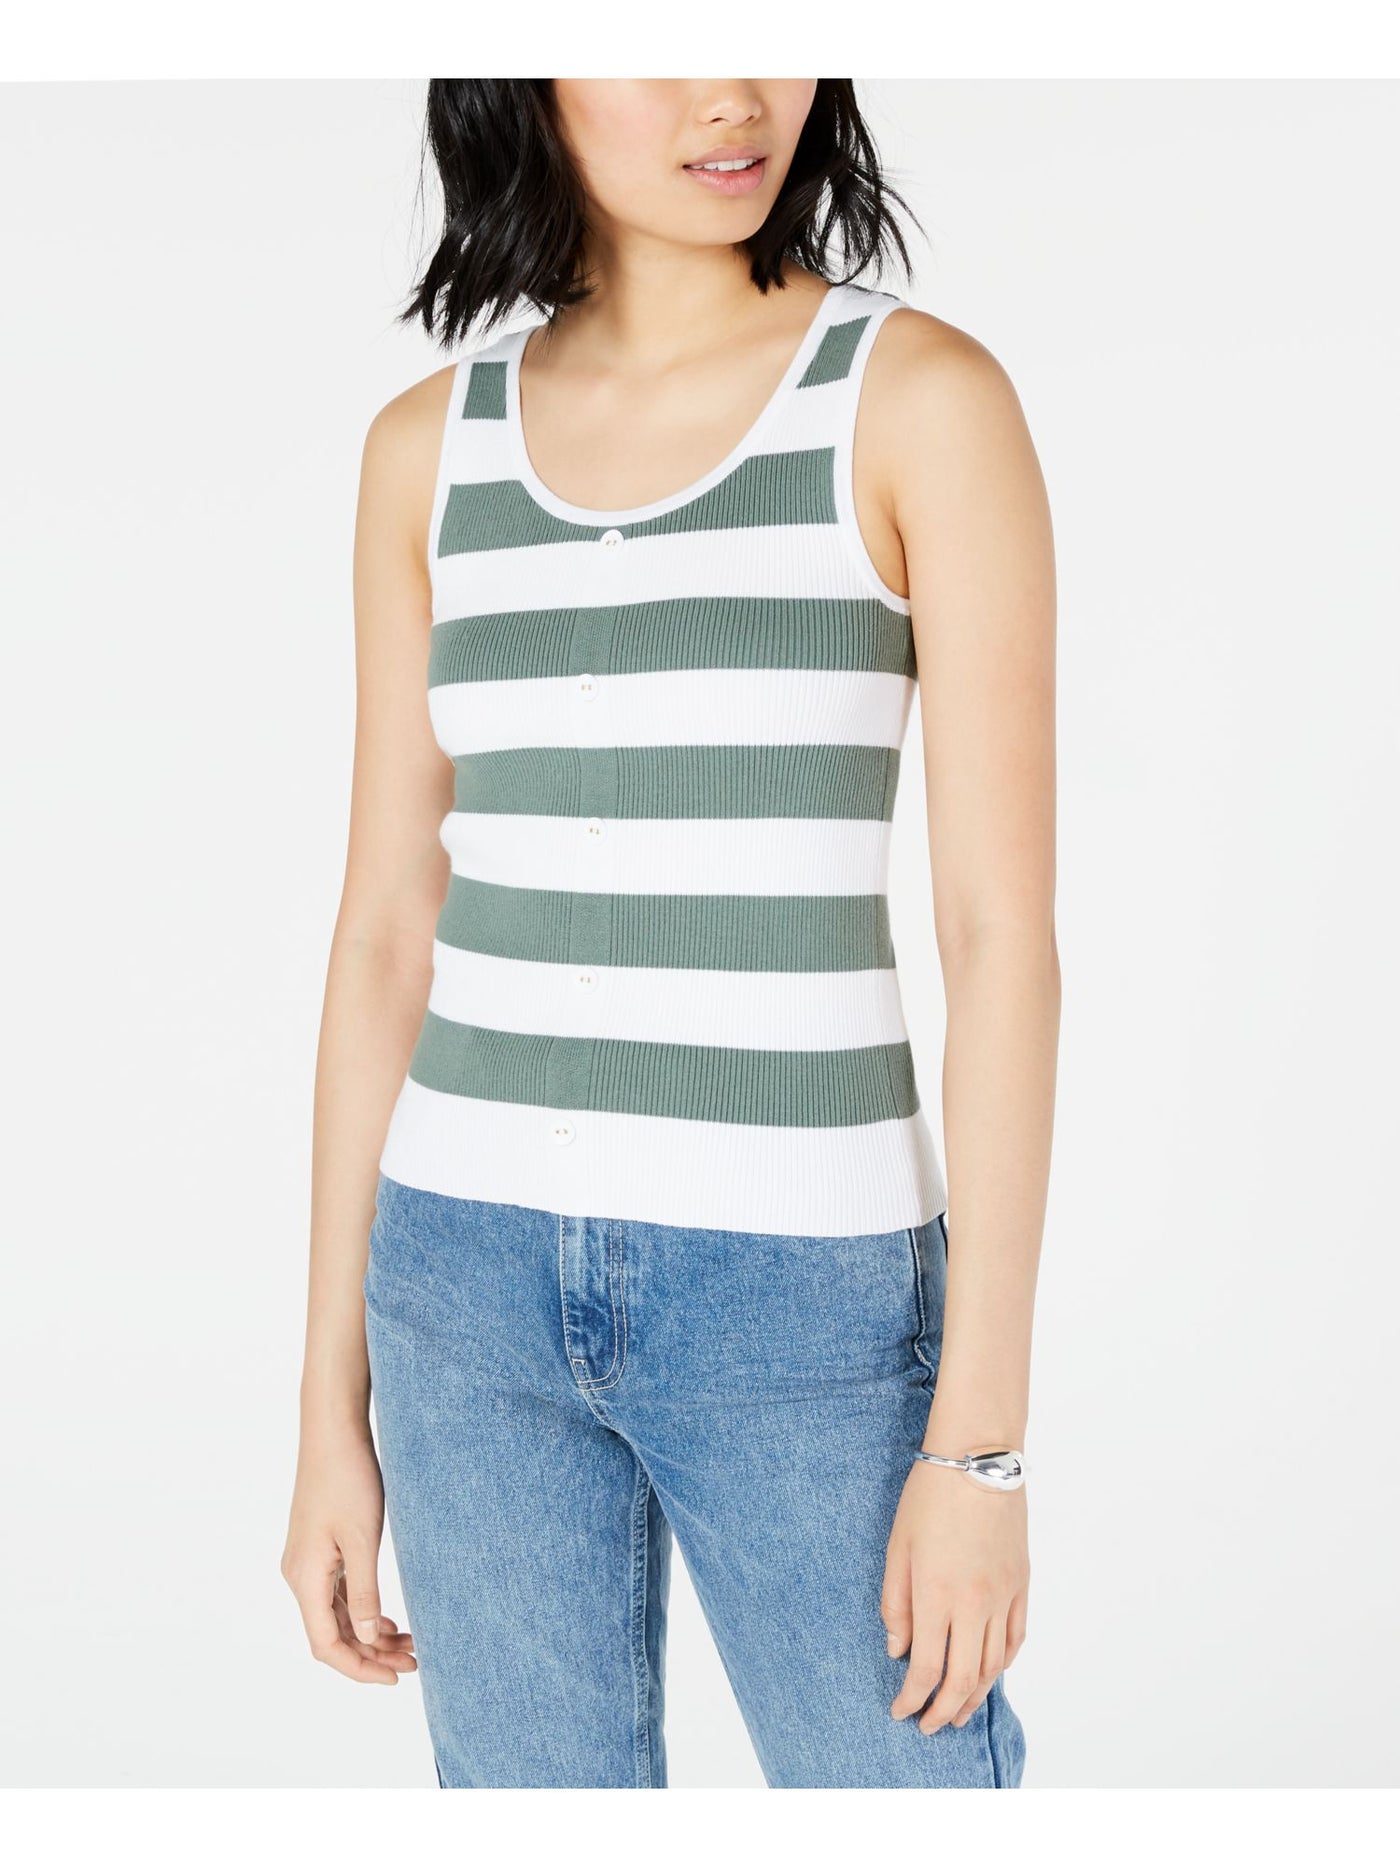 MAISON JULES Womens Green Striped Sleeveless Scoop Neck Top Size: XXL